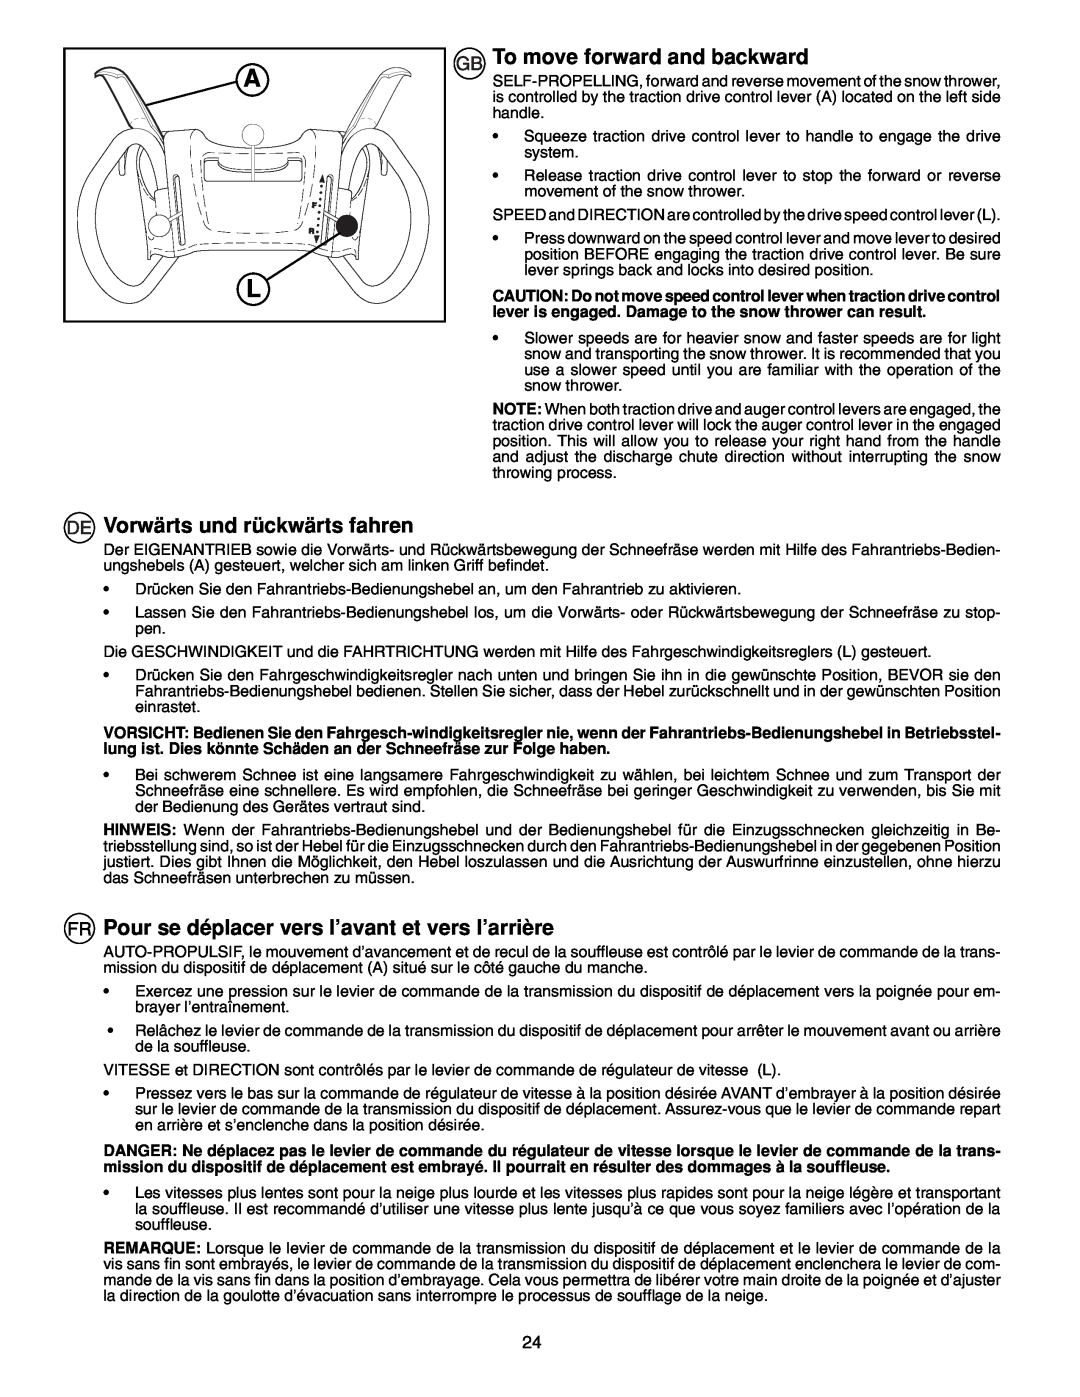 McCulloch PM55, PM85, PM105 instruction manual To move forward and backward, Vorwärts und rückwärts fahren 